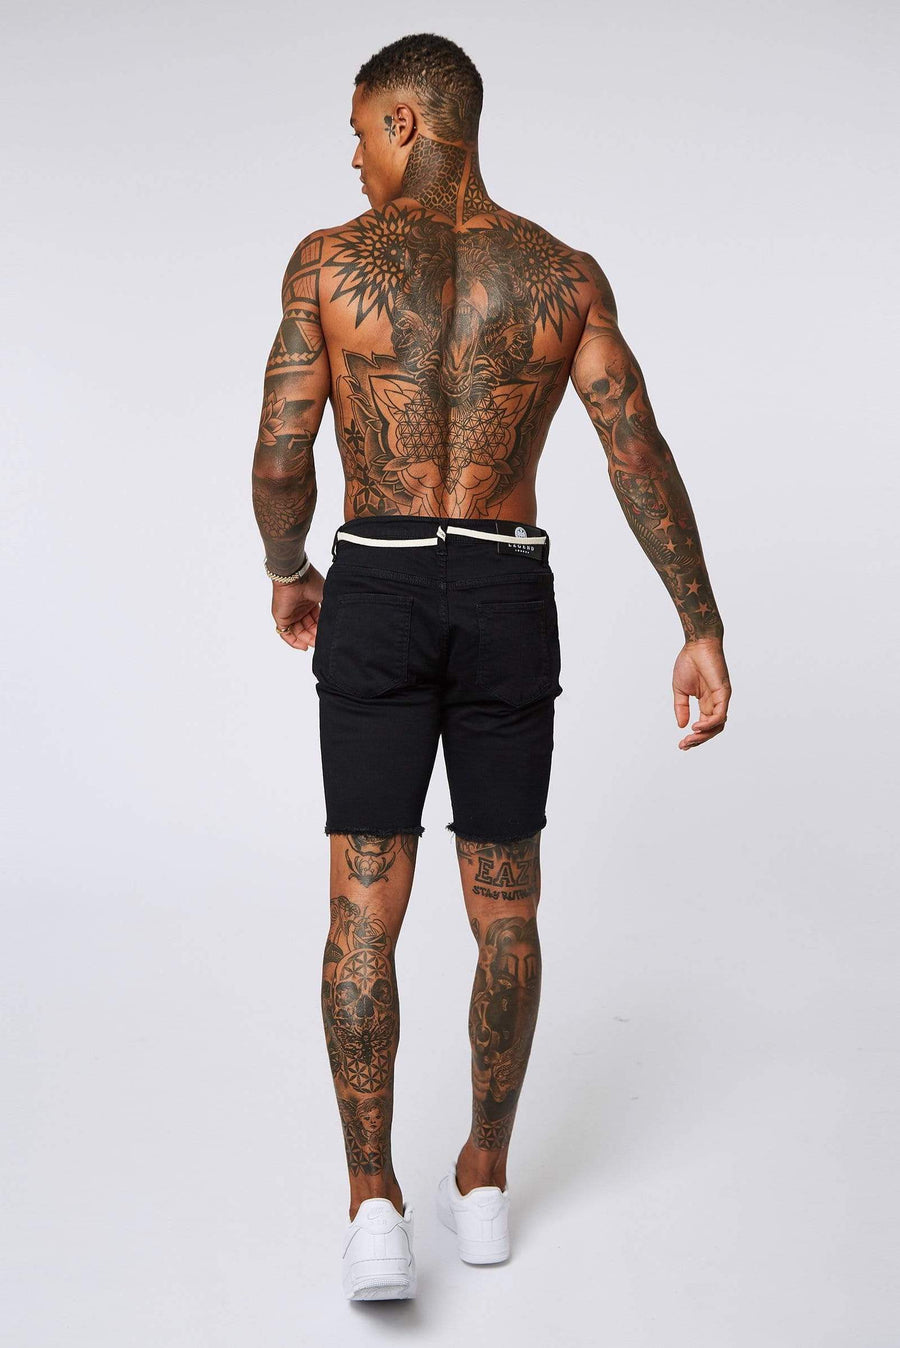 Legend London Shorts Black Denim Shorts - Ripped & Repaired